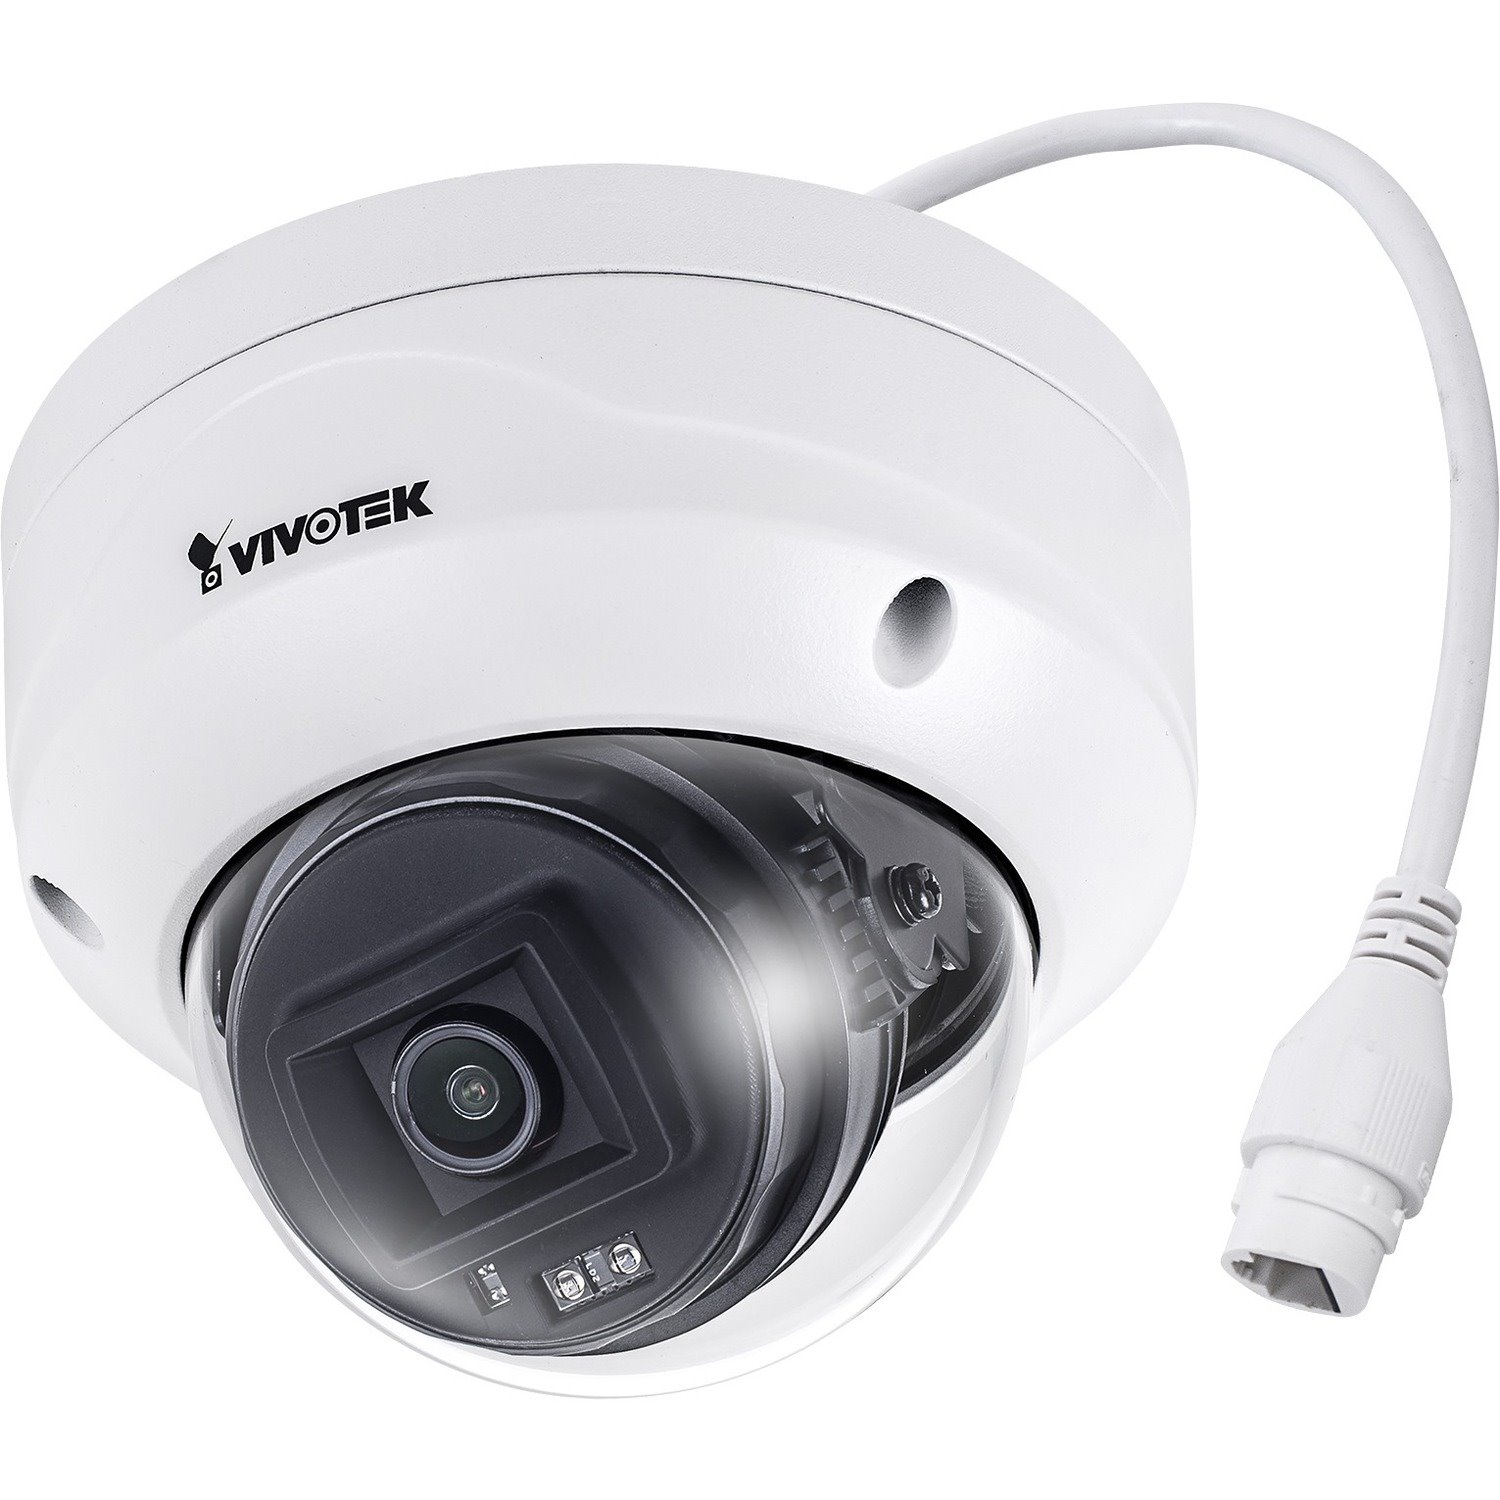 Vivotek FD9360-HF2 2 Megapixel HD Network Camera - Dome - TAA Compliant